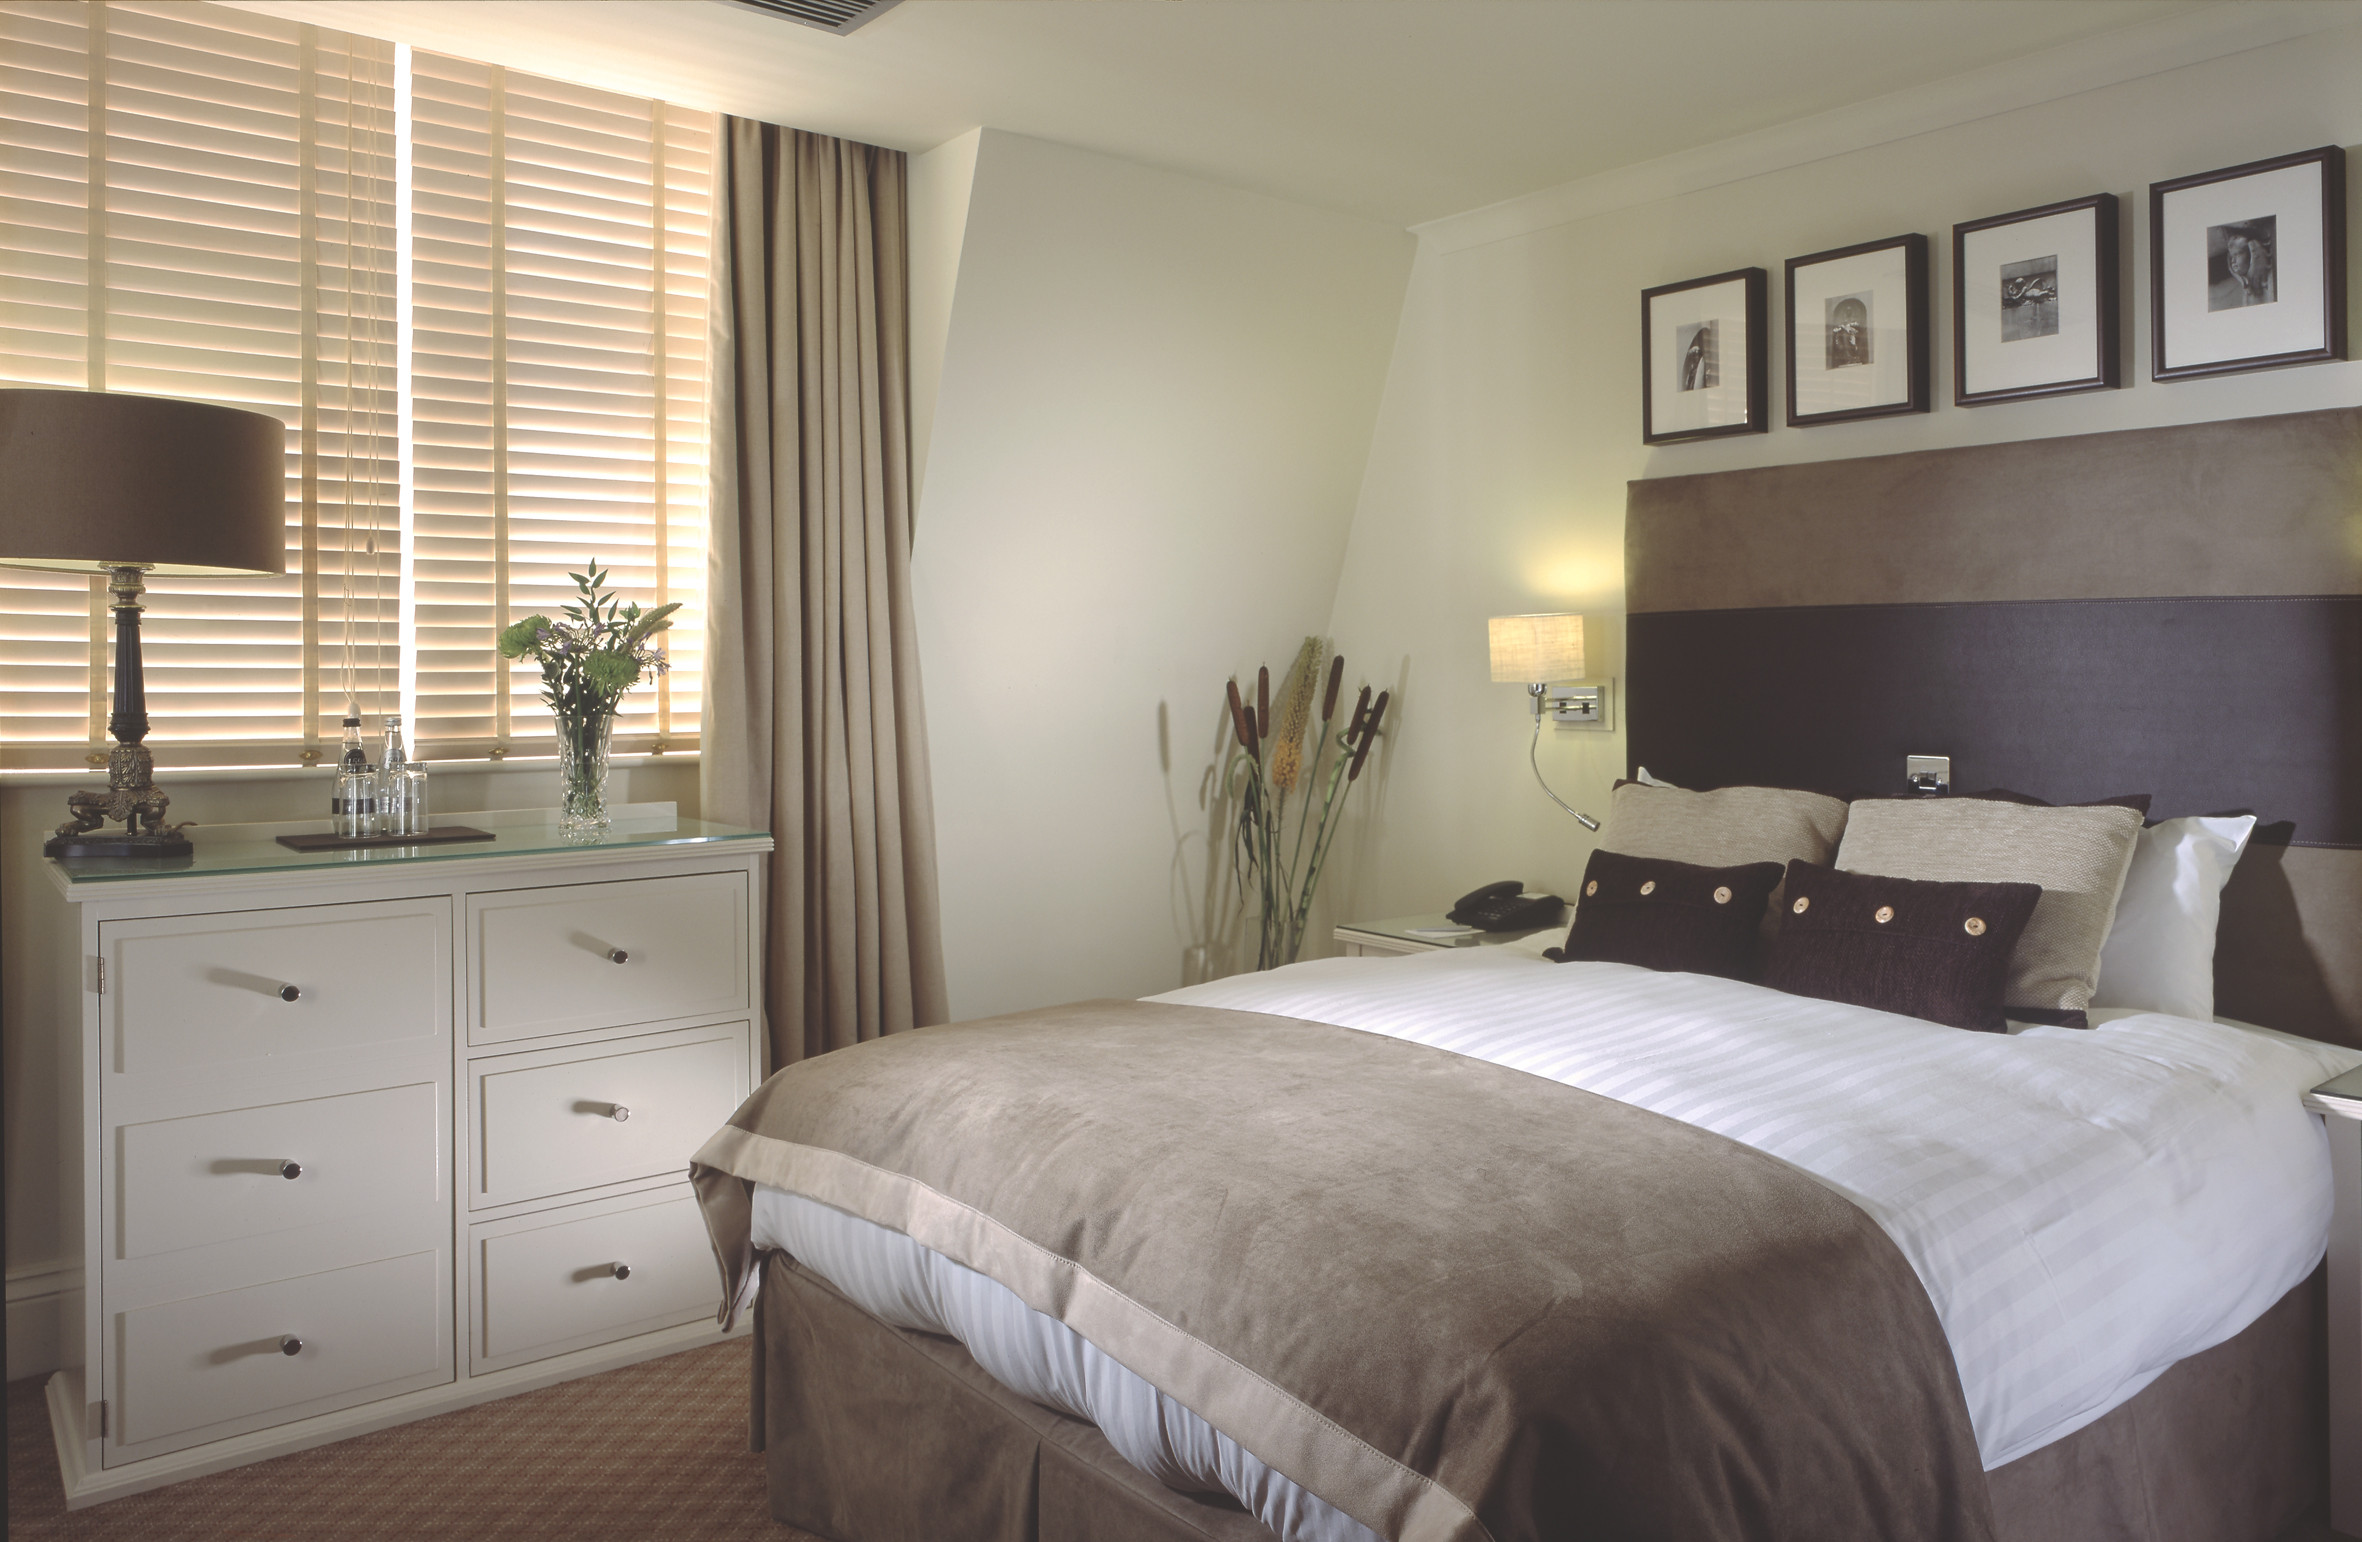 Cute Bedroom Decor
 Cute Bedroom Ideas Classical Decorations Versus Modern Design